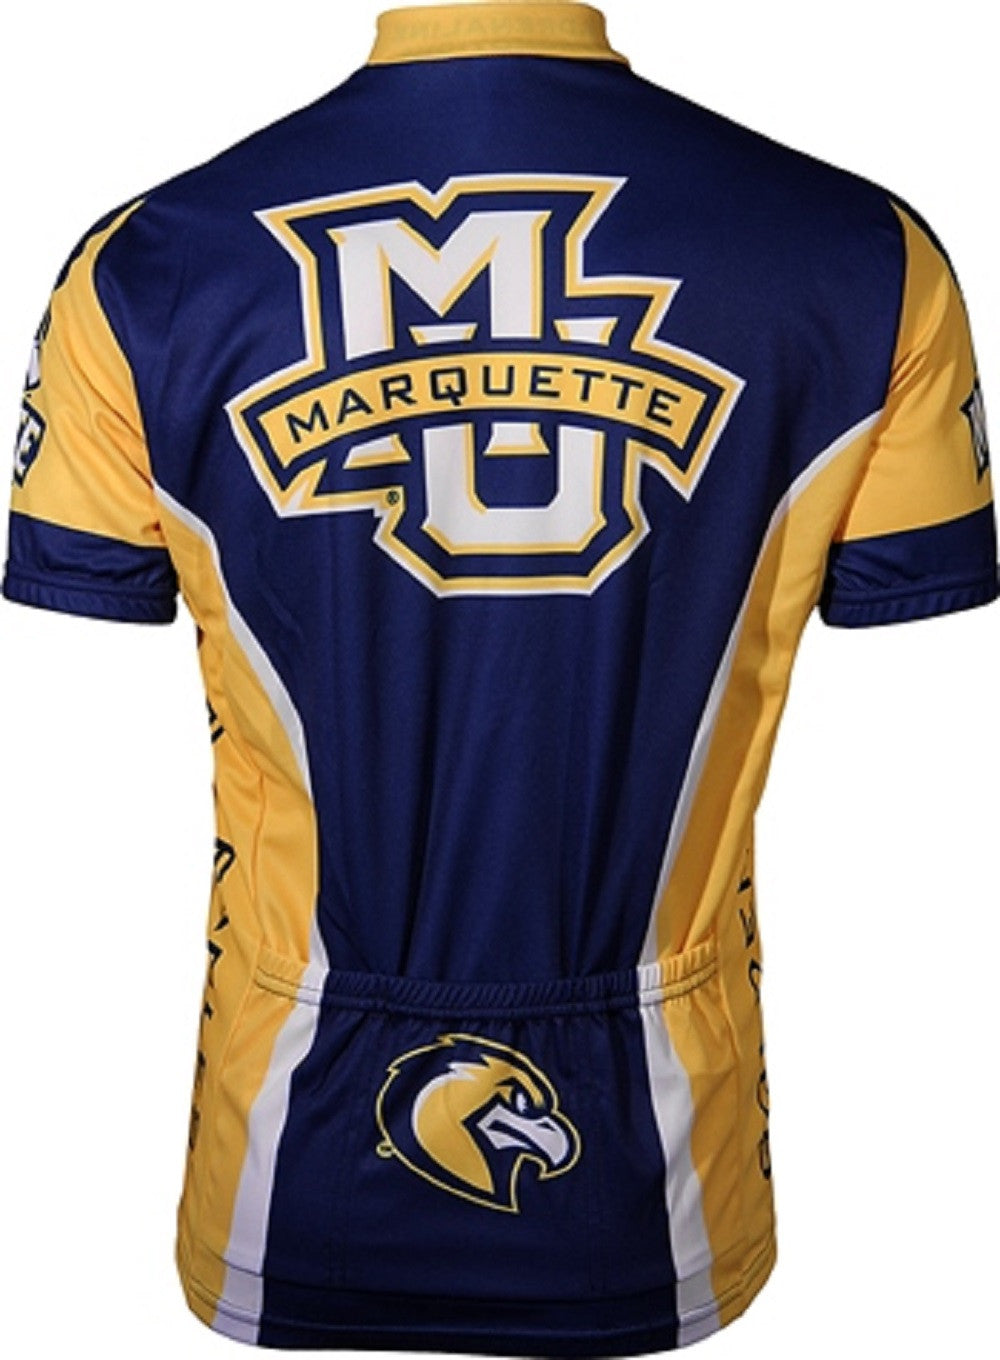 Marquette Golden Eagles Men's Cycling Jersey (S, M, L, XL, 2XL, 3XL)